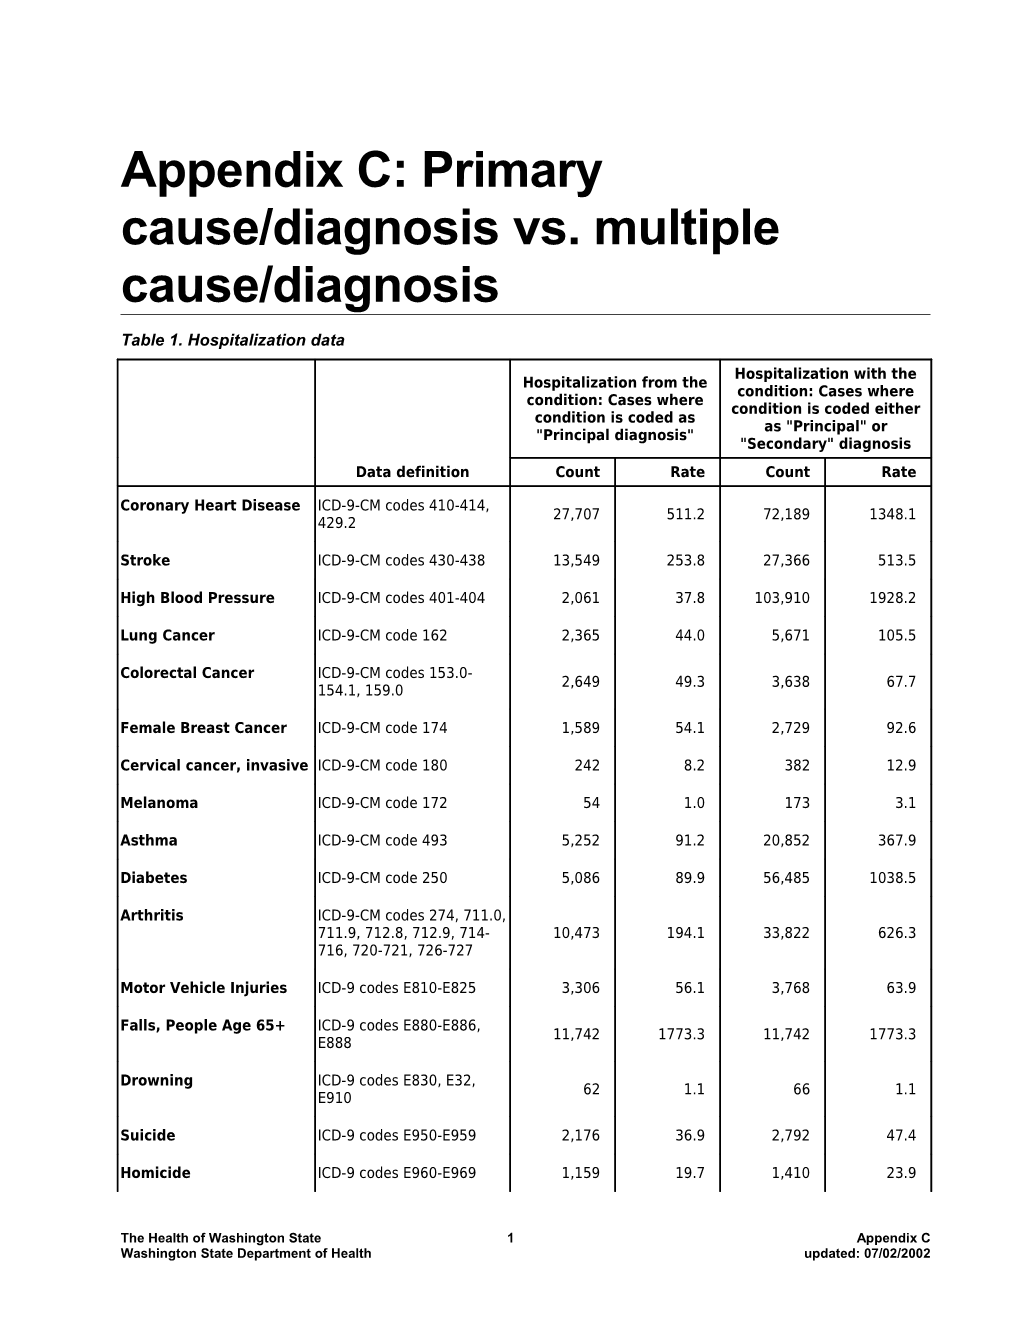 HWS: Appendix C - Primary Cause/Diagnosis Vs. Multiple Cause/Diagnosis